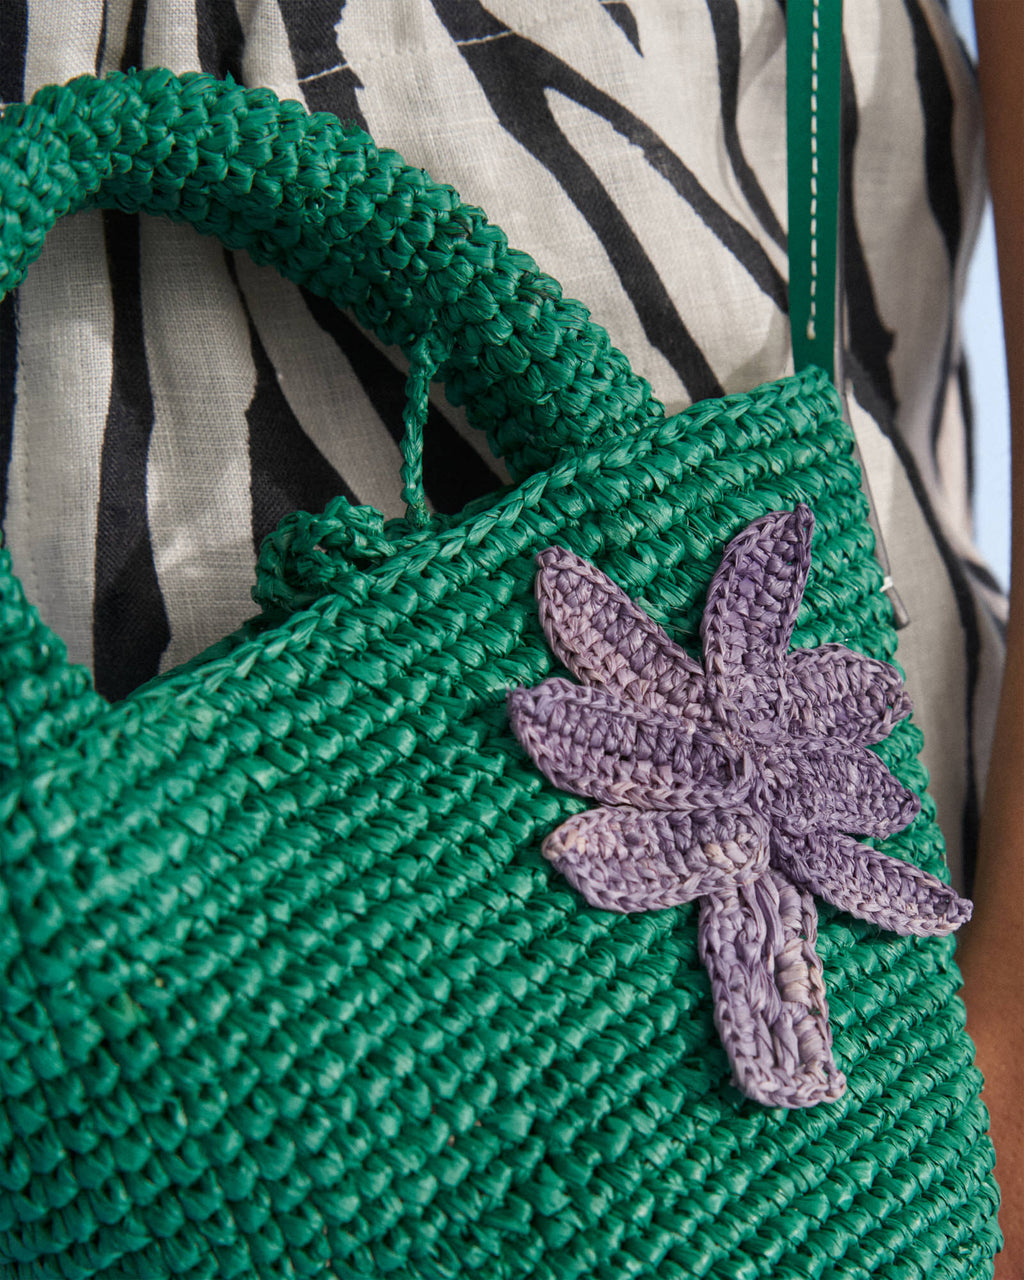 Raffia & Leather Summer Bag Mini - Vitamin Green with Palm